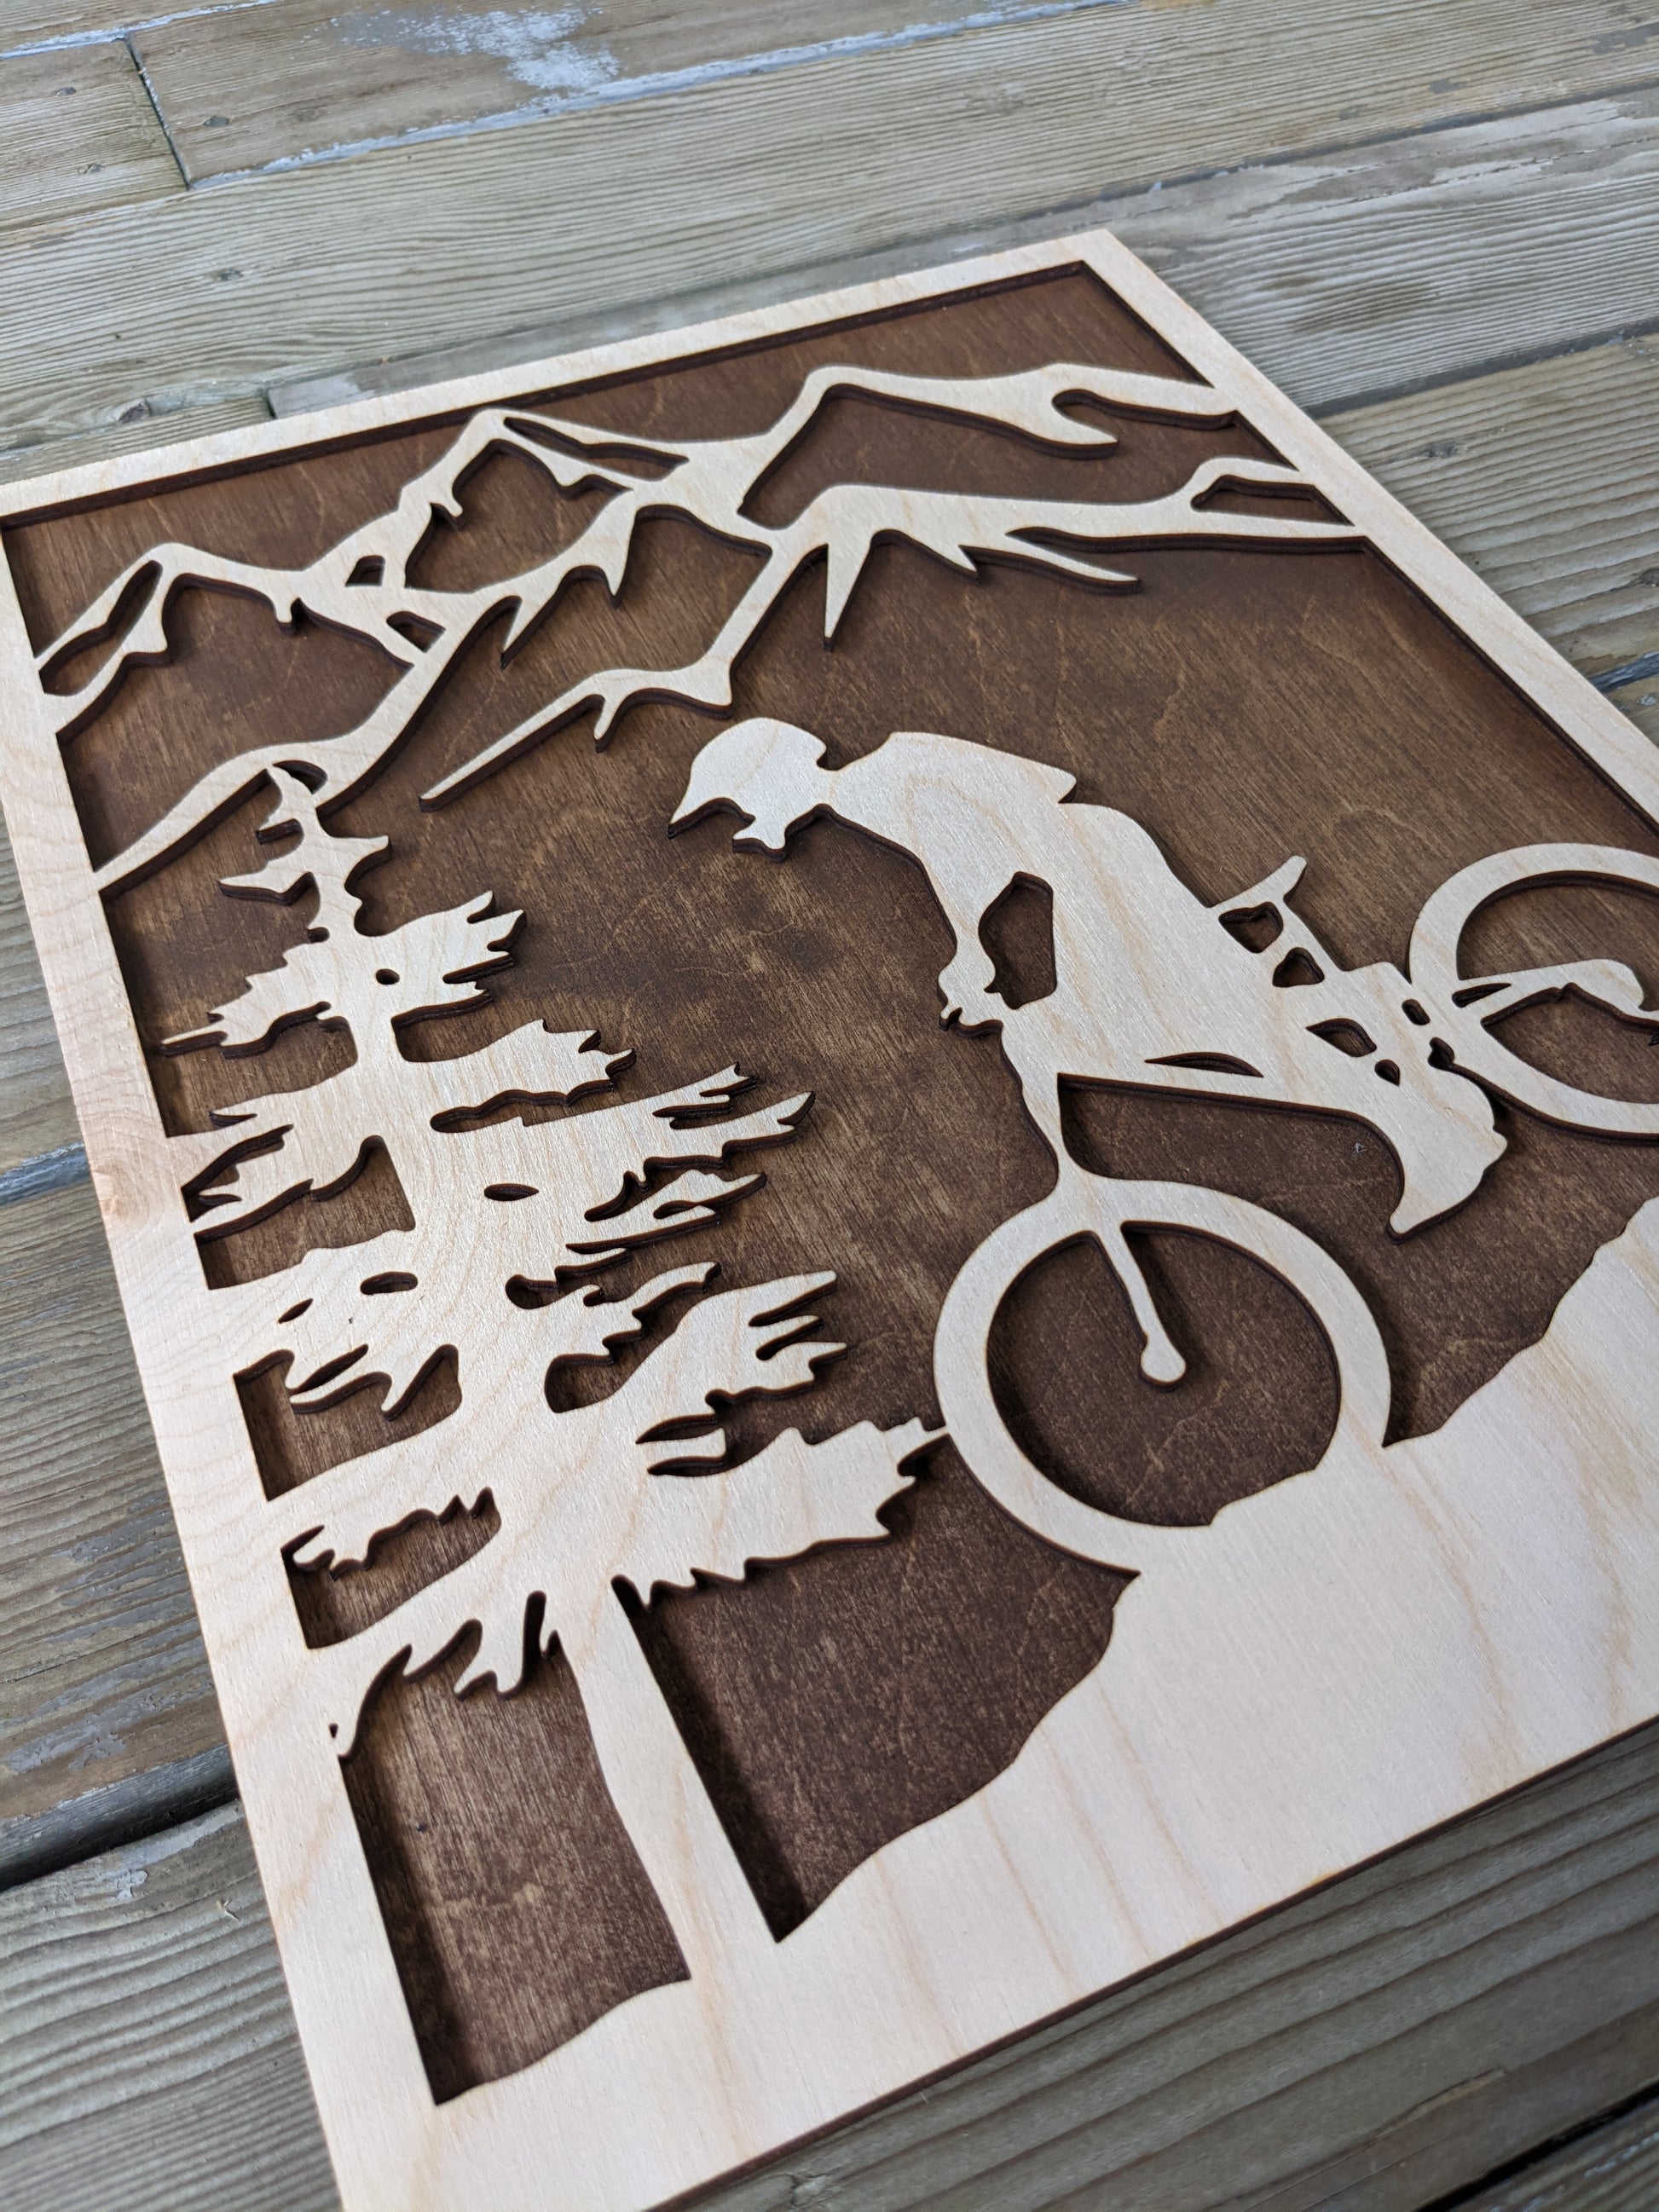 3D Layered Mountain Biking Wall Art Sign 35.00